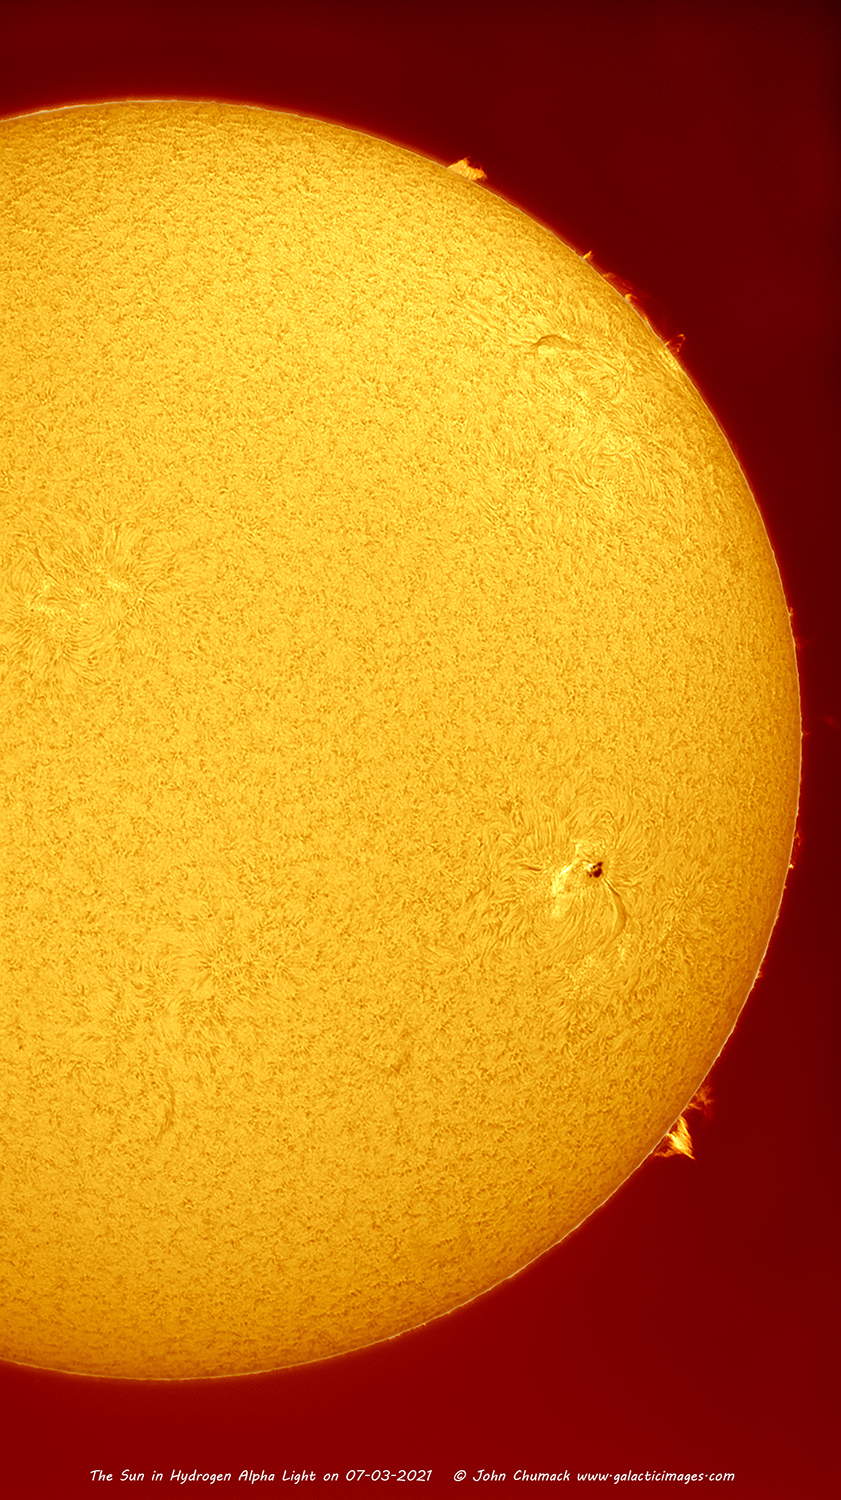 Hydrogen Alpha Sun on 07-03-2021